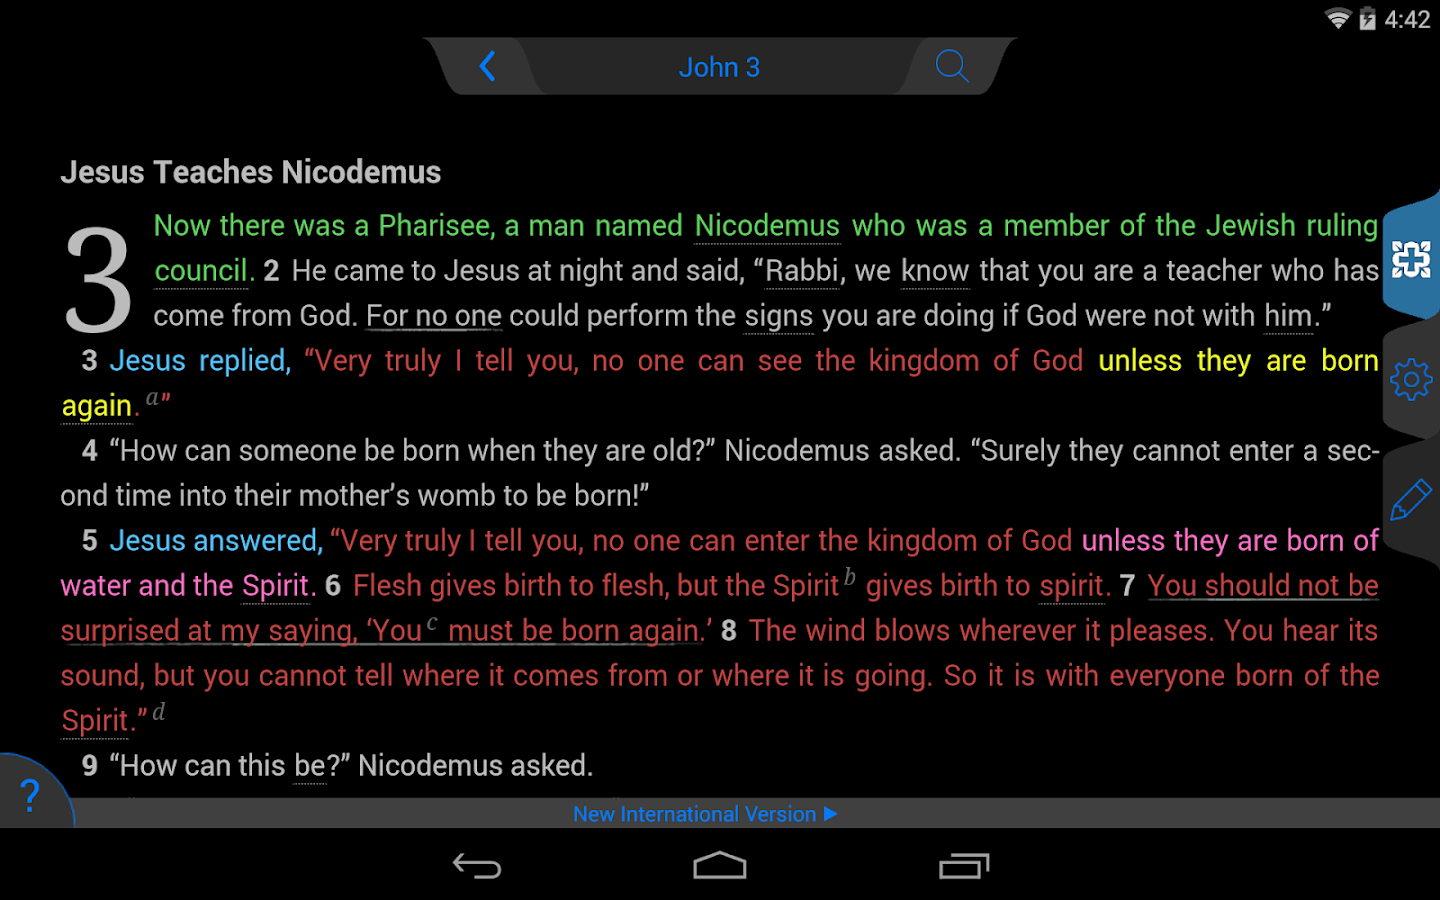 NIV Study Bible 7.8 [Full Version] Android APK Free 